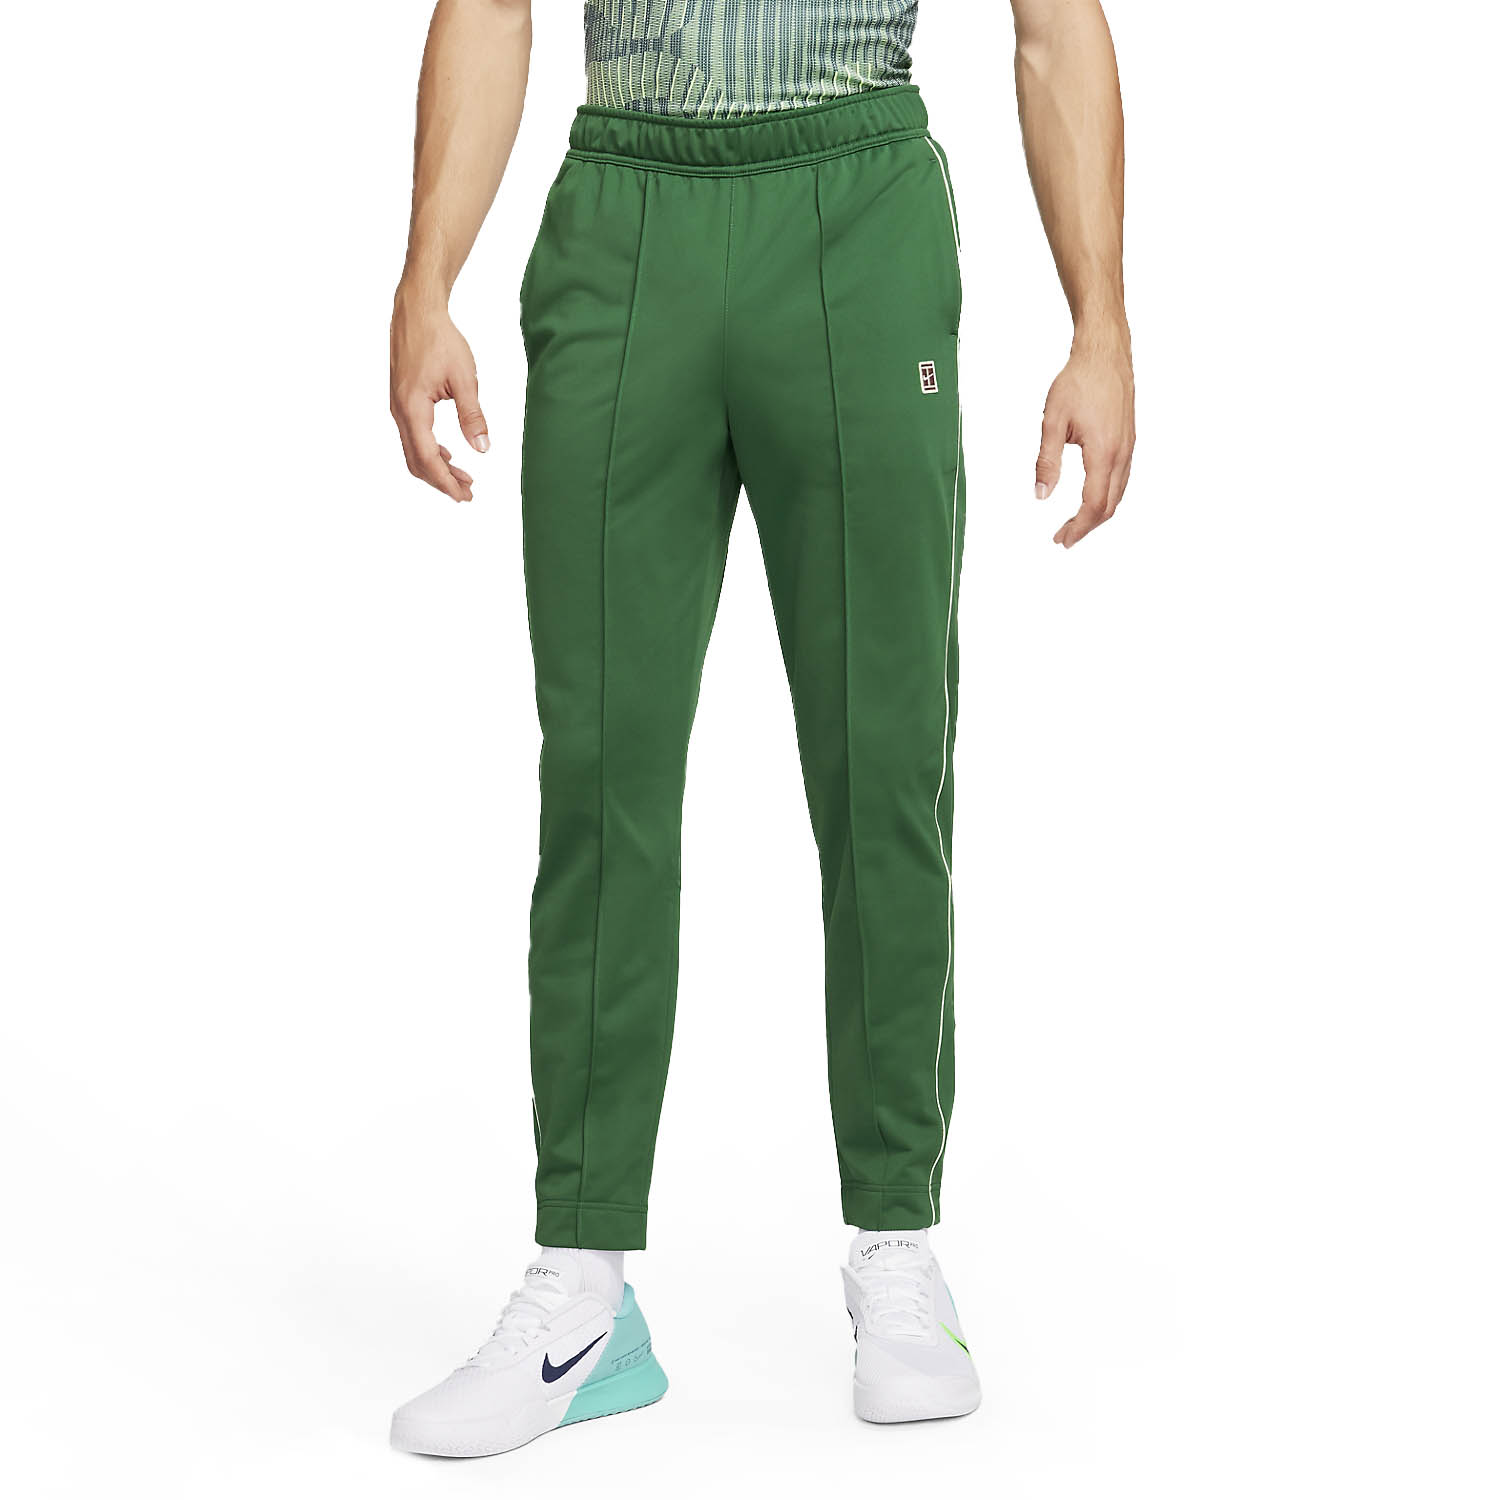 Nike Heritage Men's Tennis Pants - Gorge Green/Coconut Milk